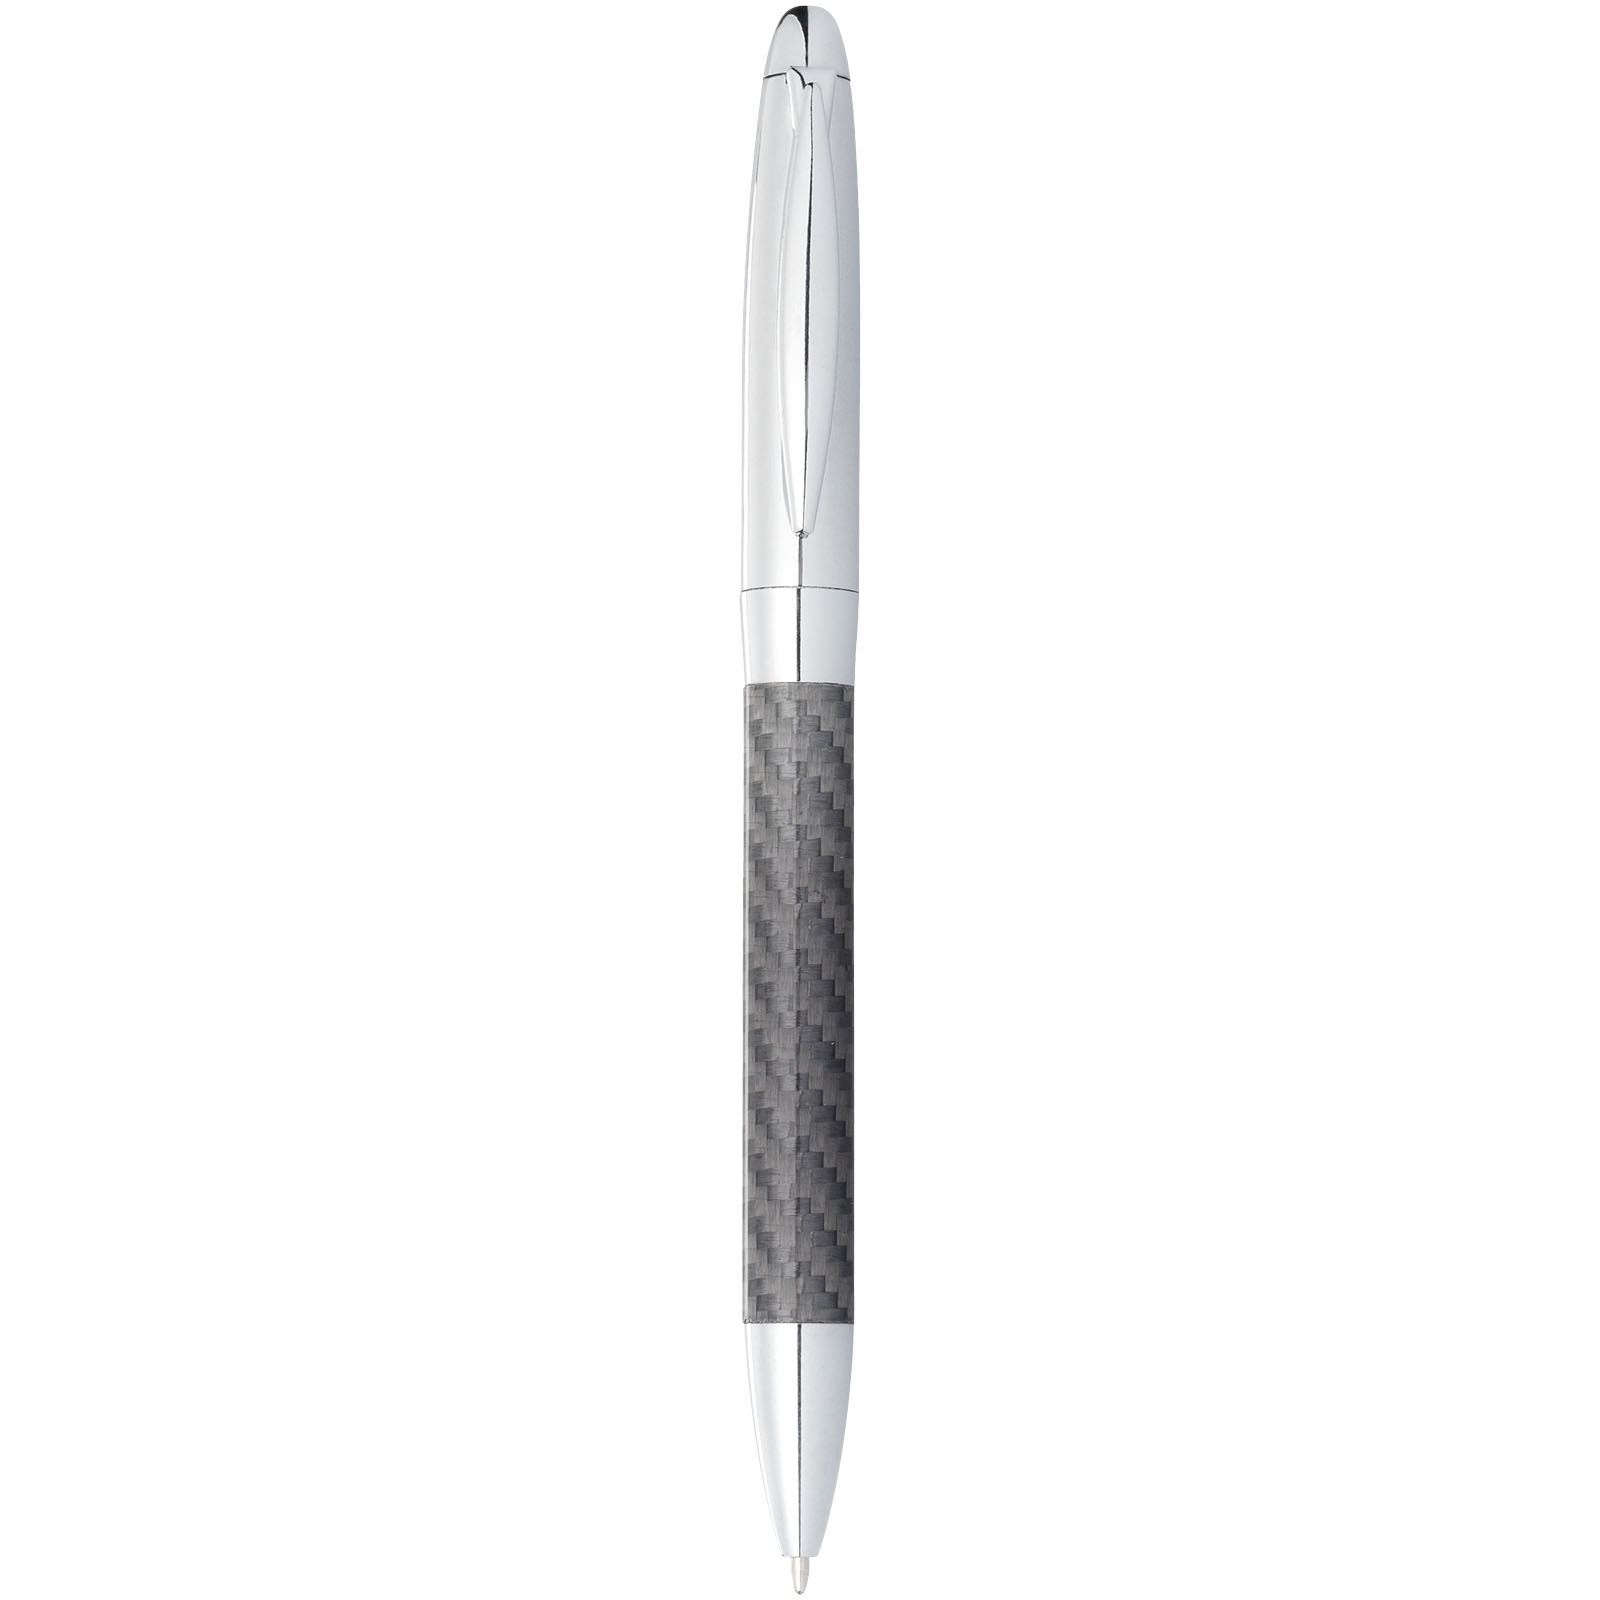 Advertising Ballpoint Pens - Winona ballpoint pen with carbon fibre details